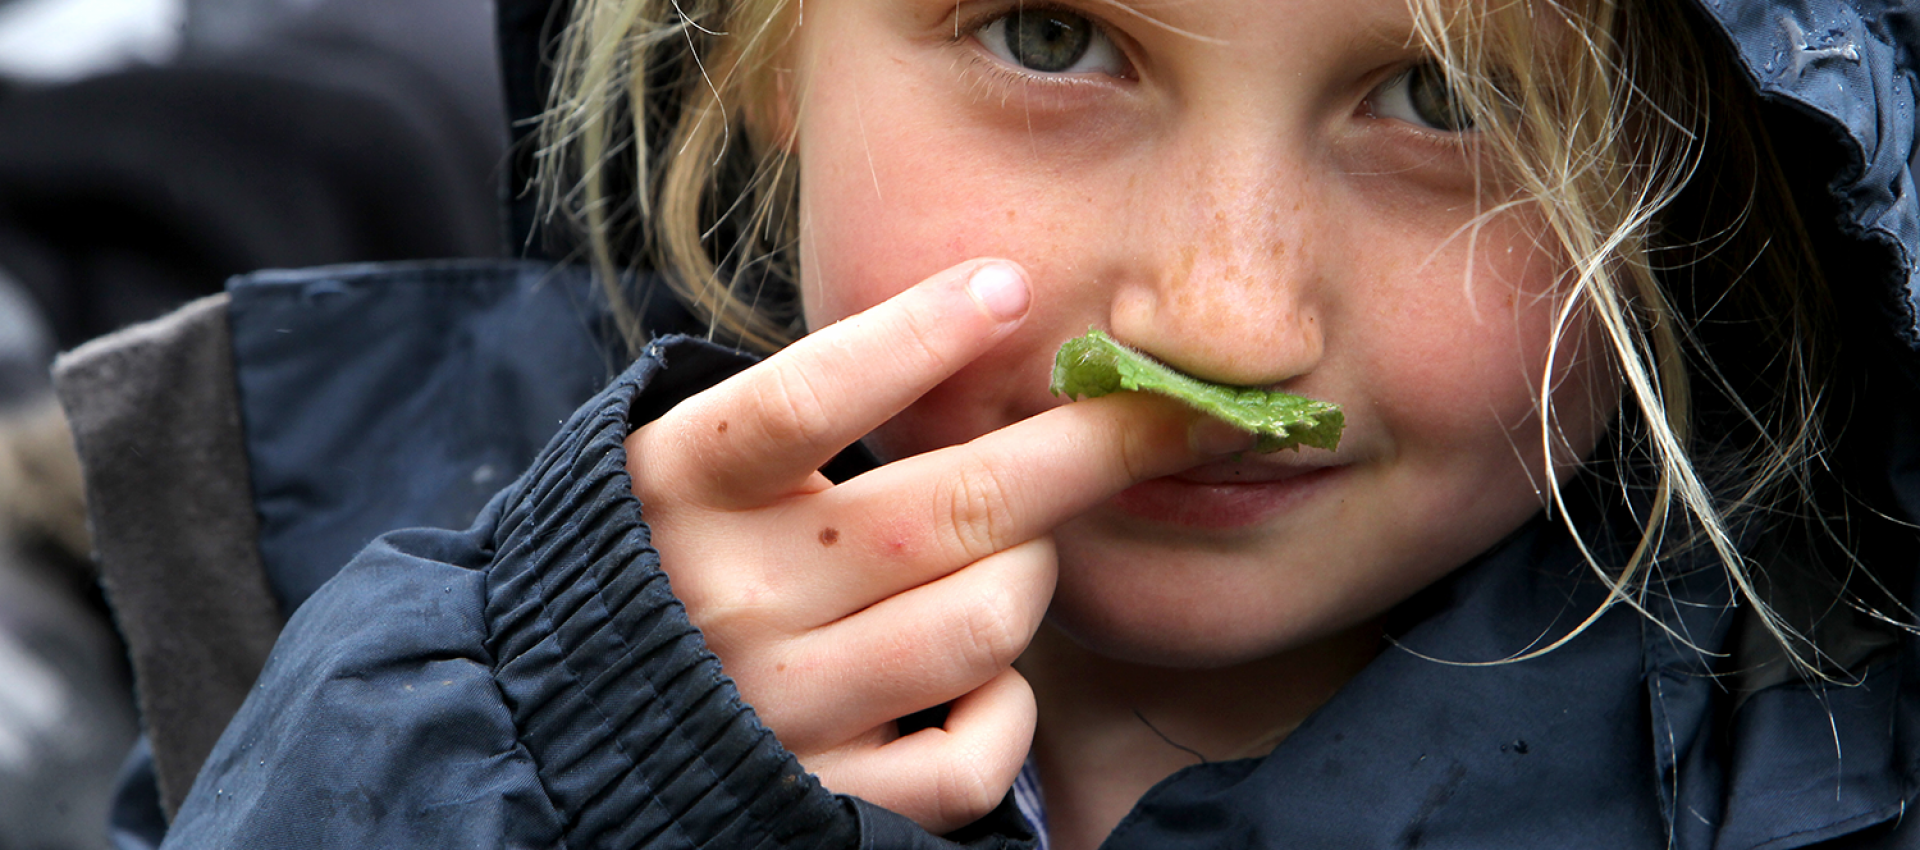 Senses - girl smells a leaf for outdoor education